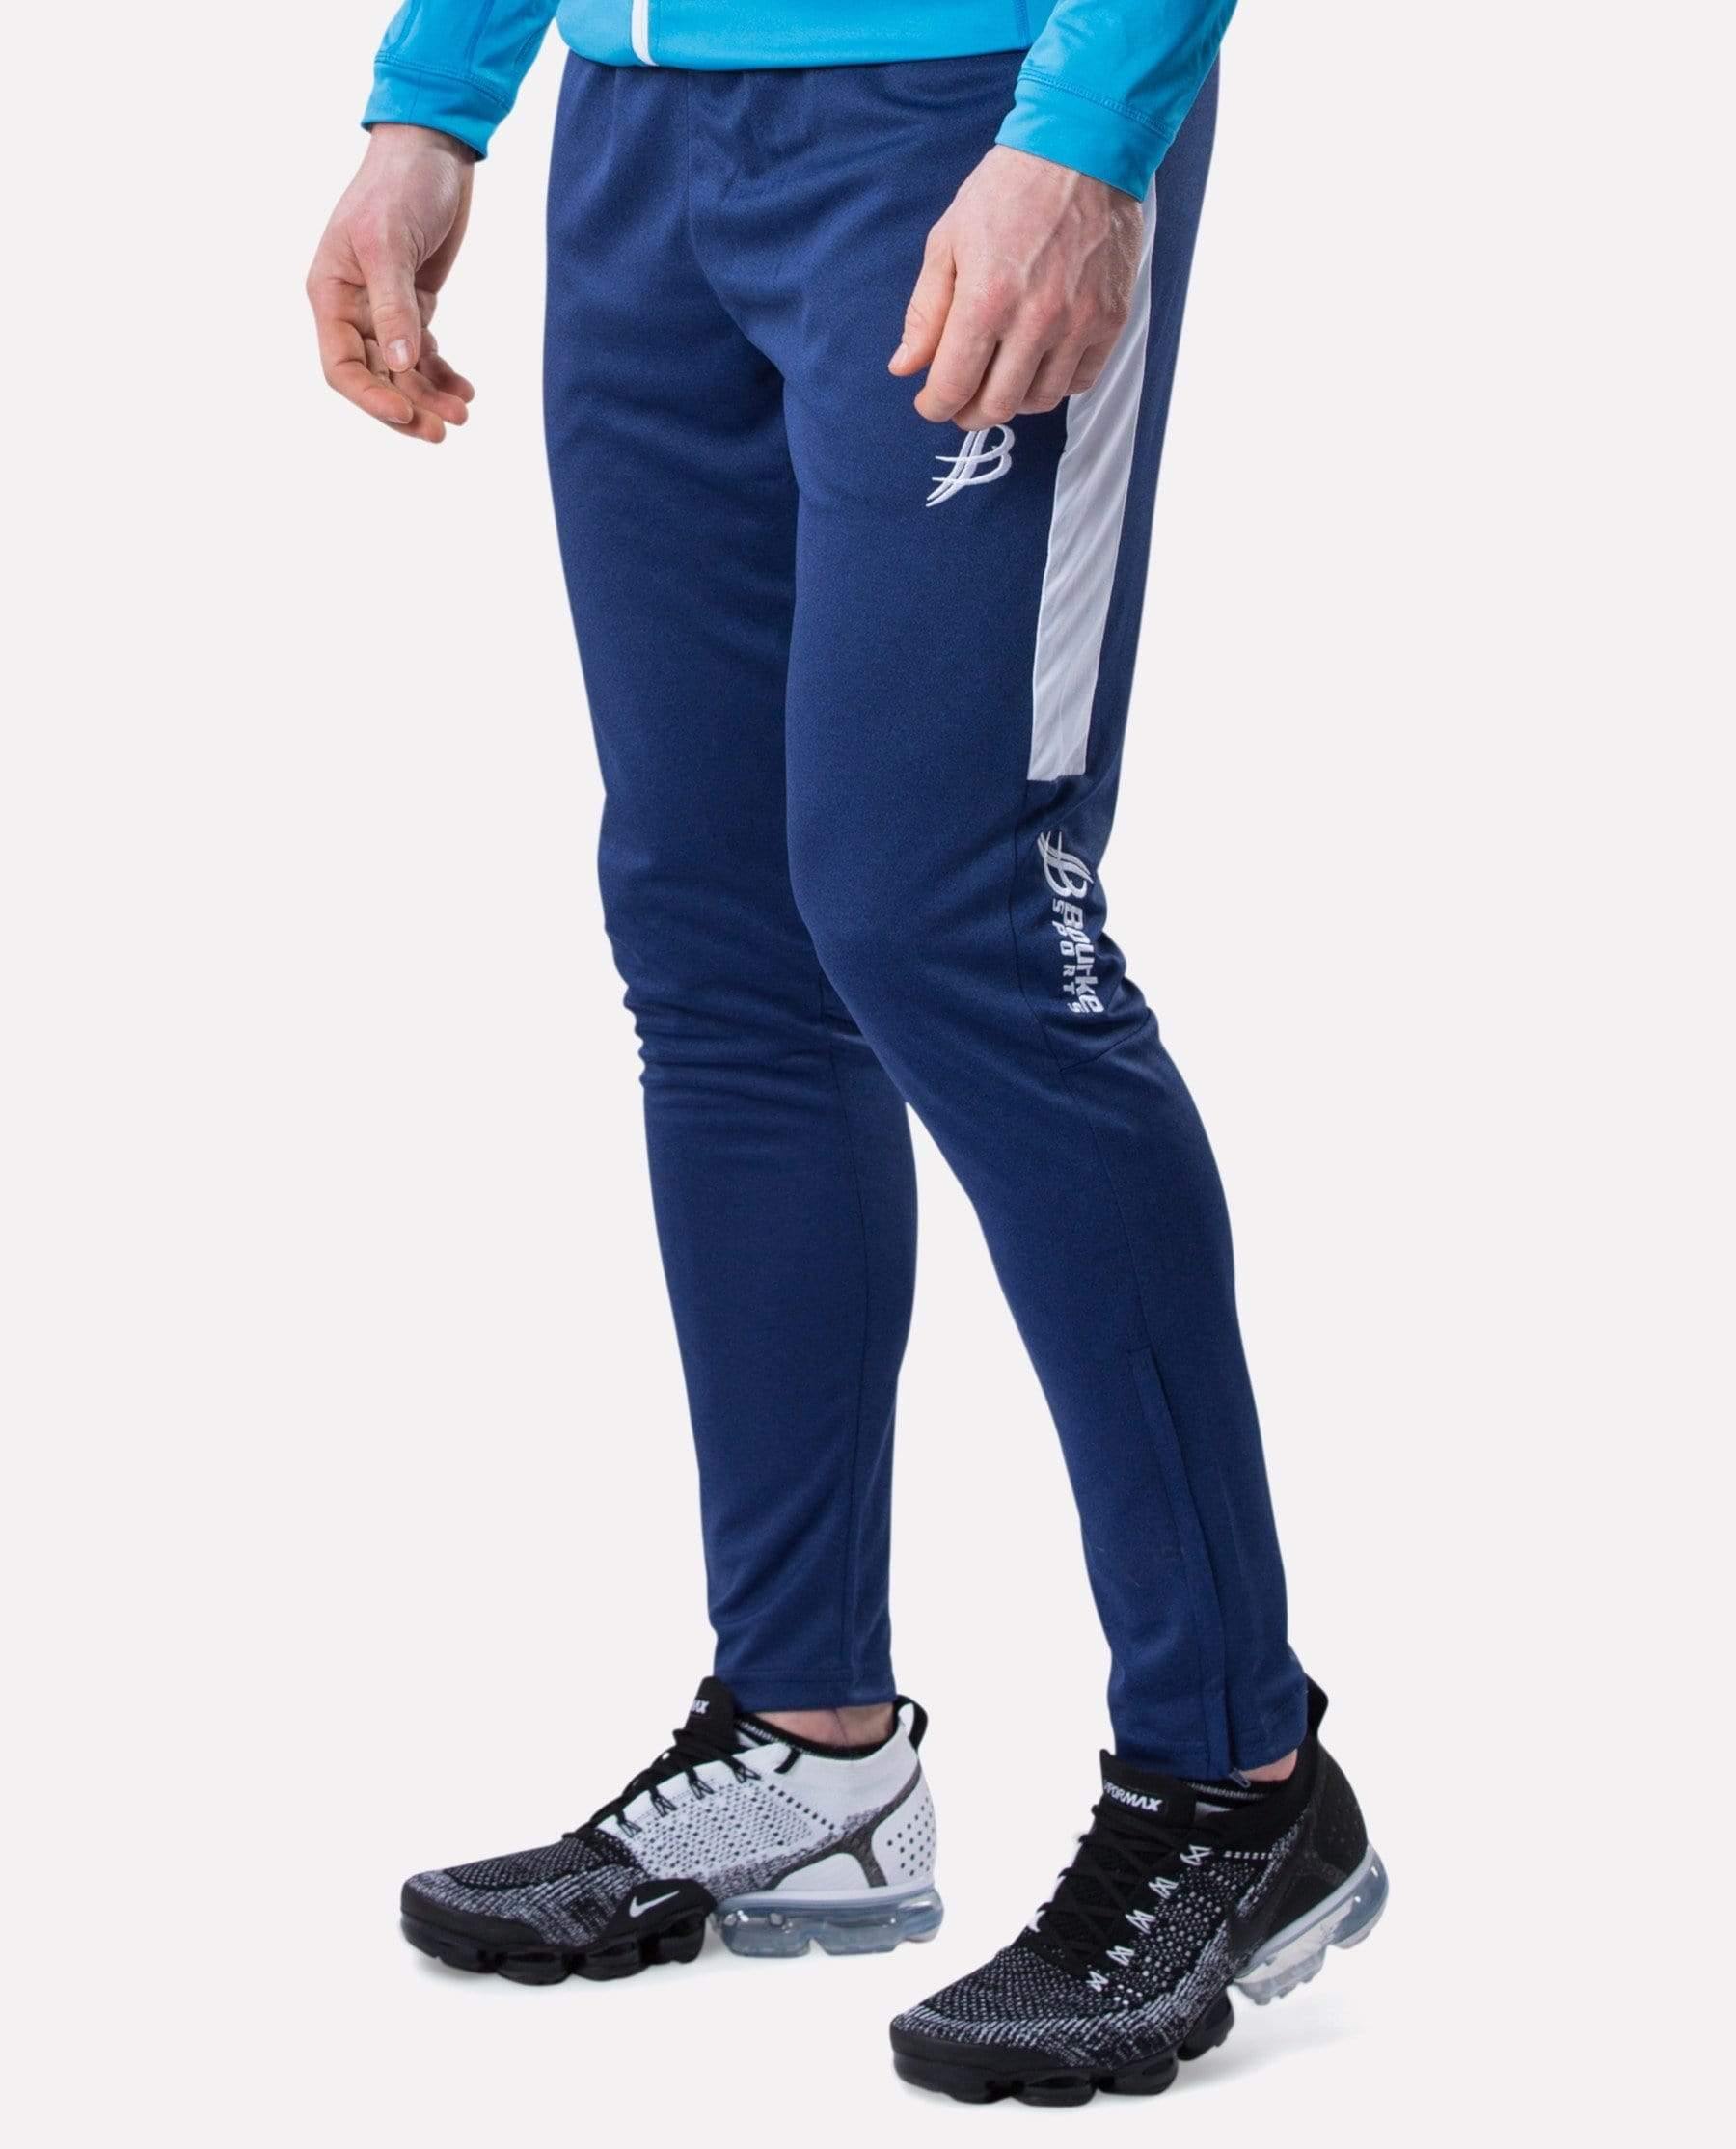 ALPHA Kids Skinny Pants (Navy/White) - Bourke Sports Limited